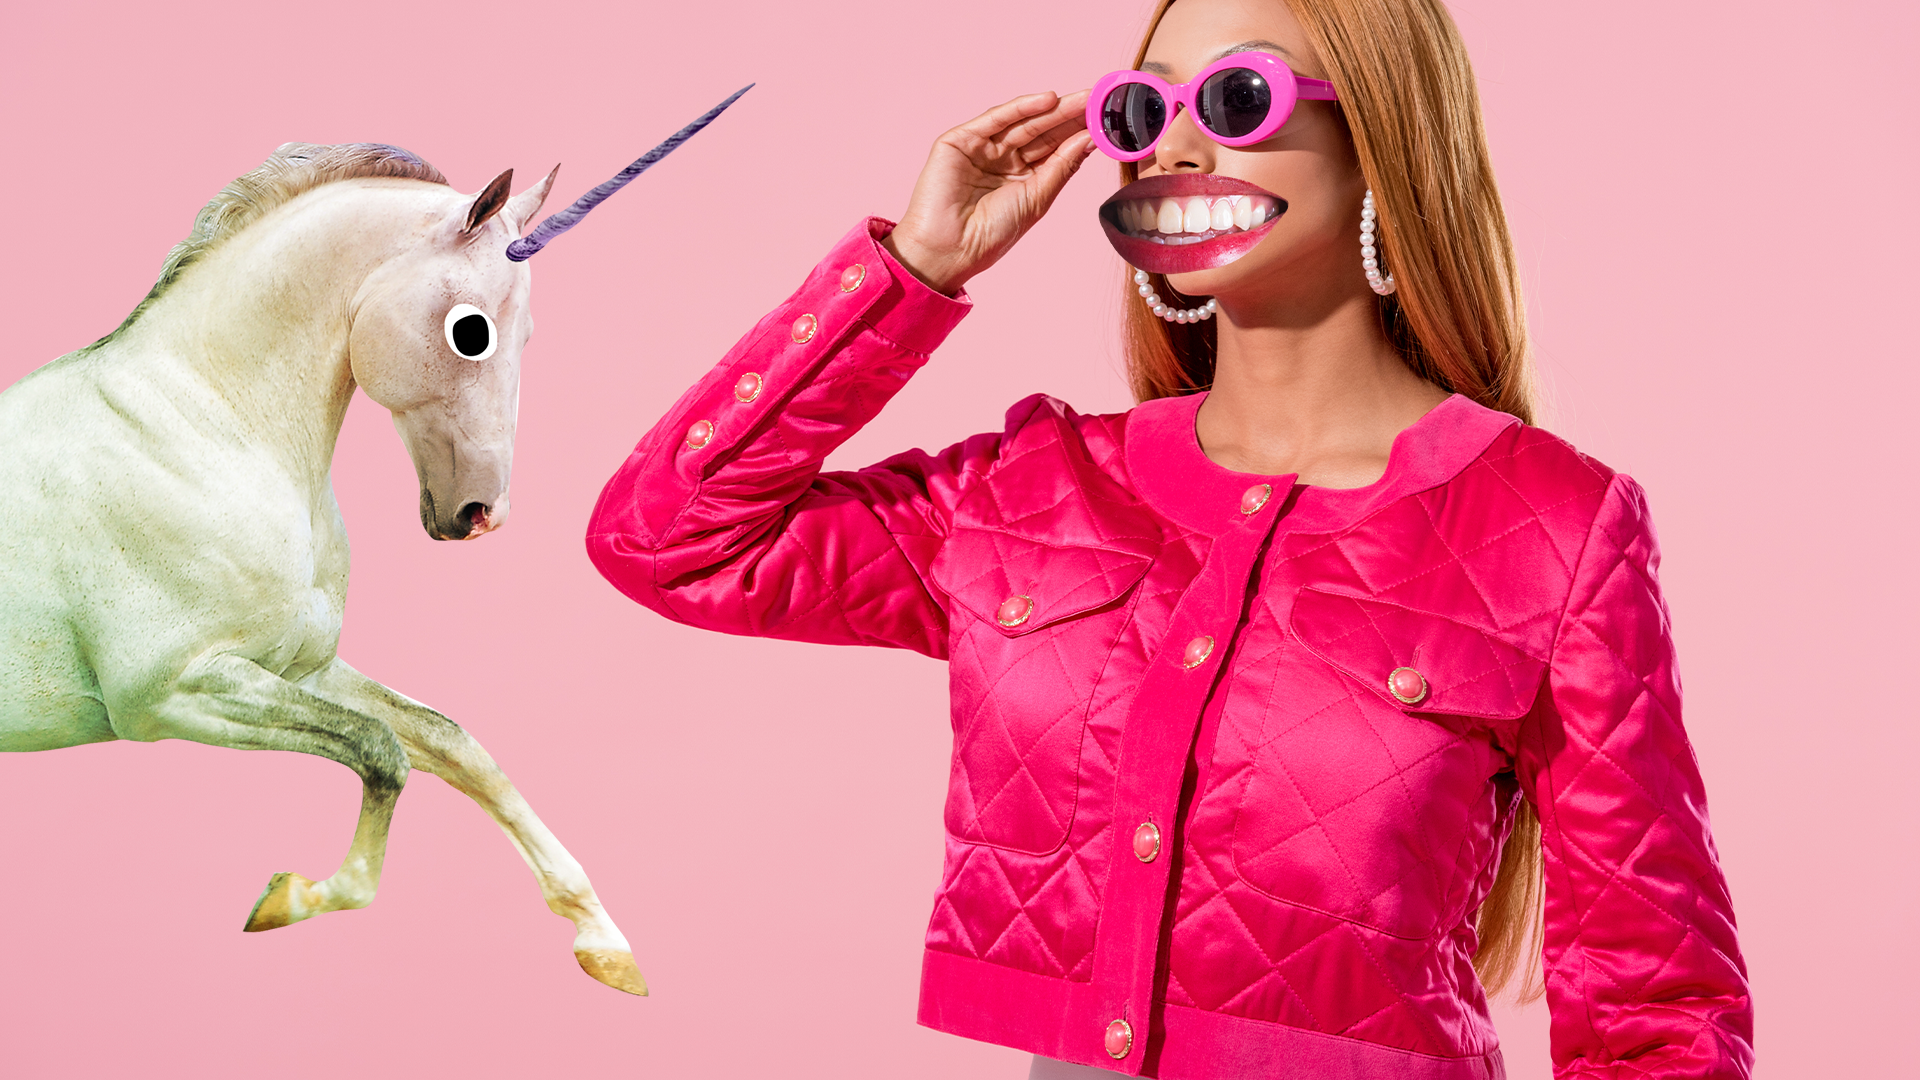 Barbie style woman with unicorn